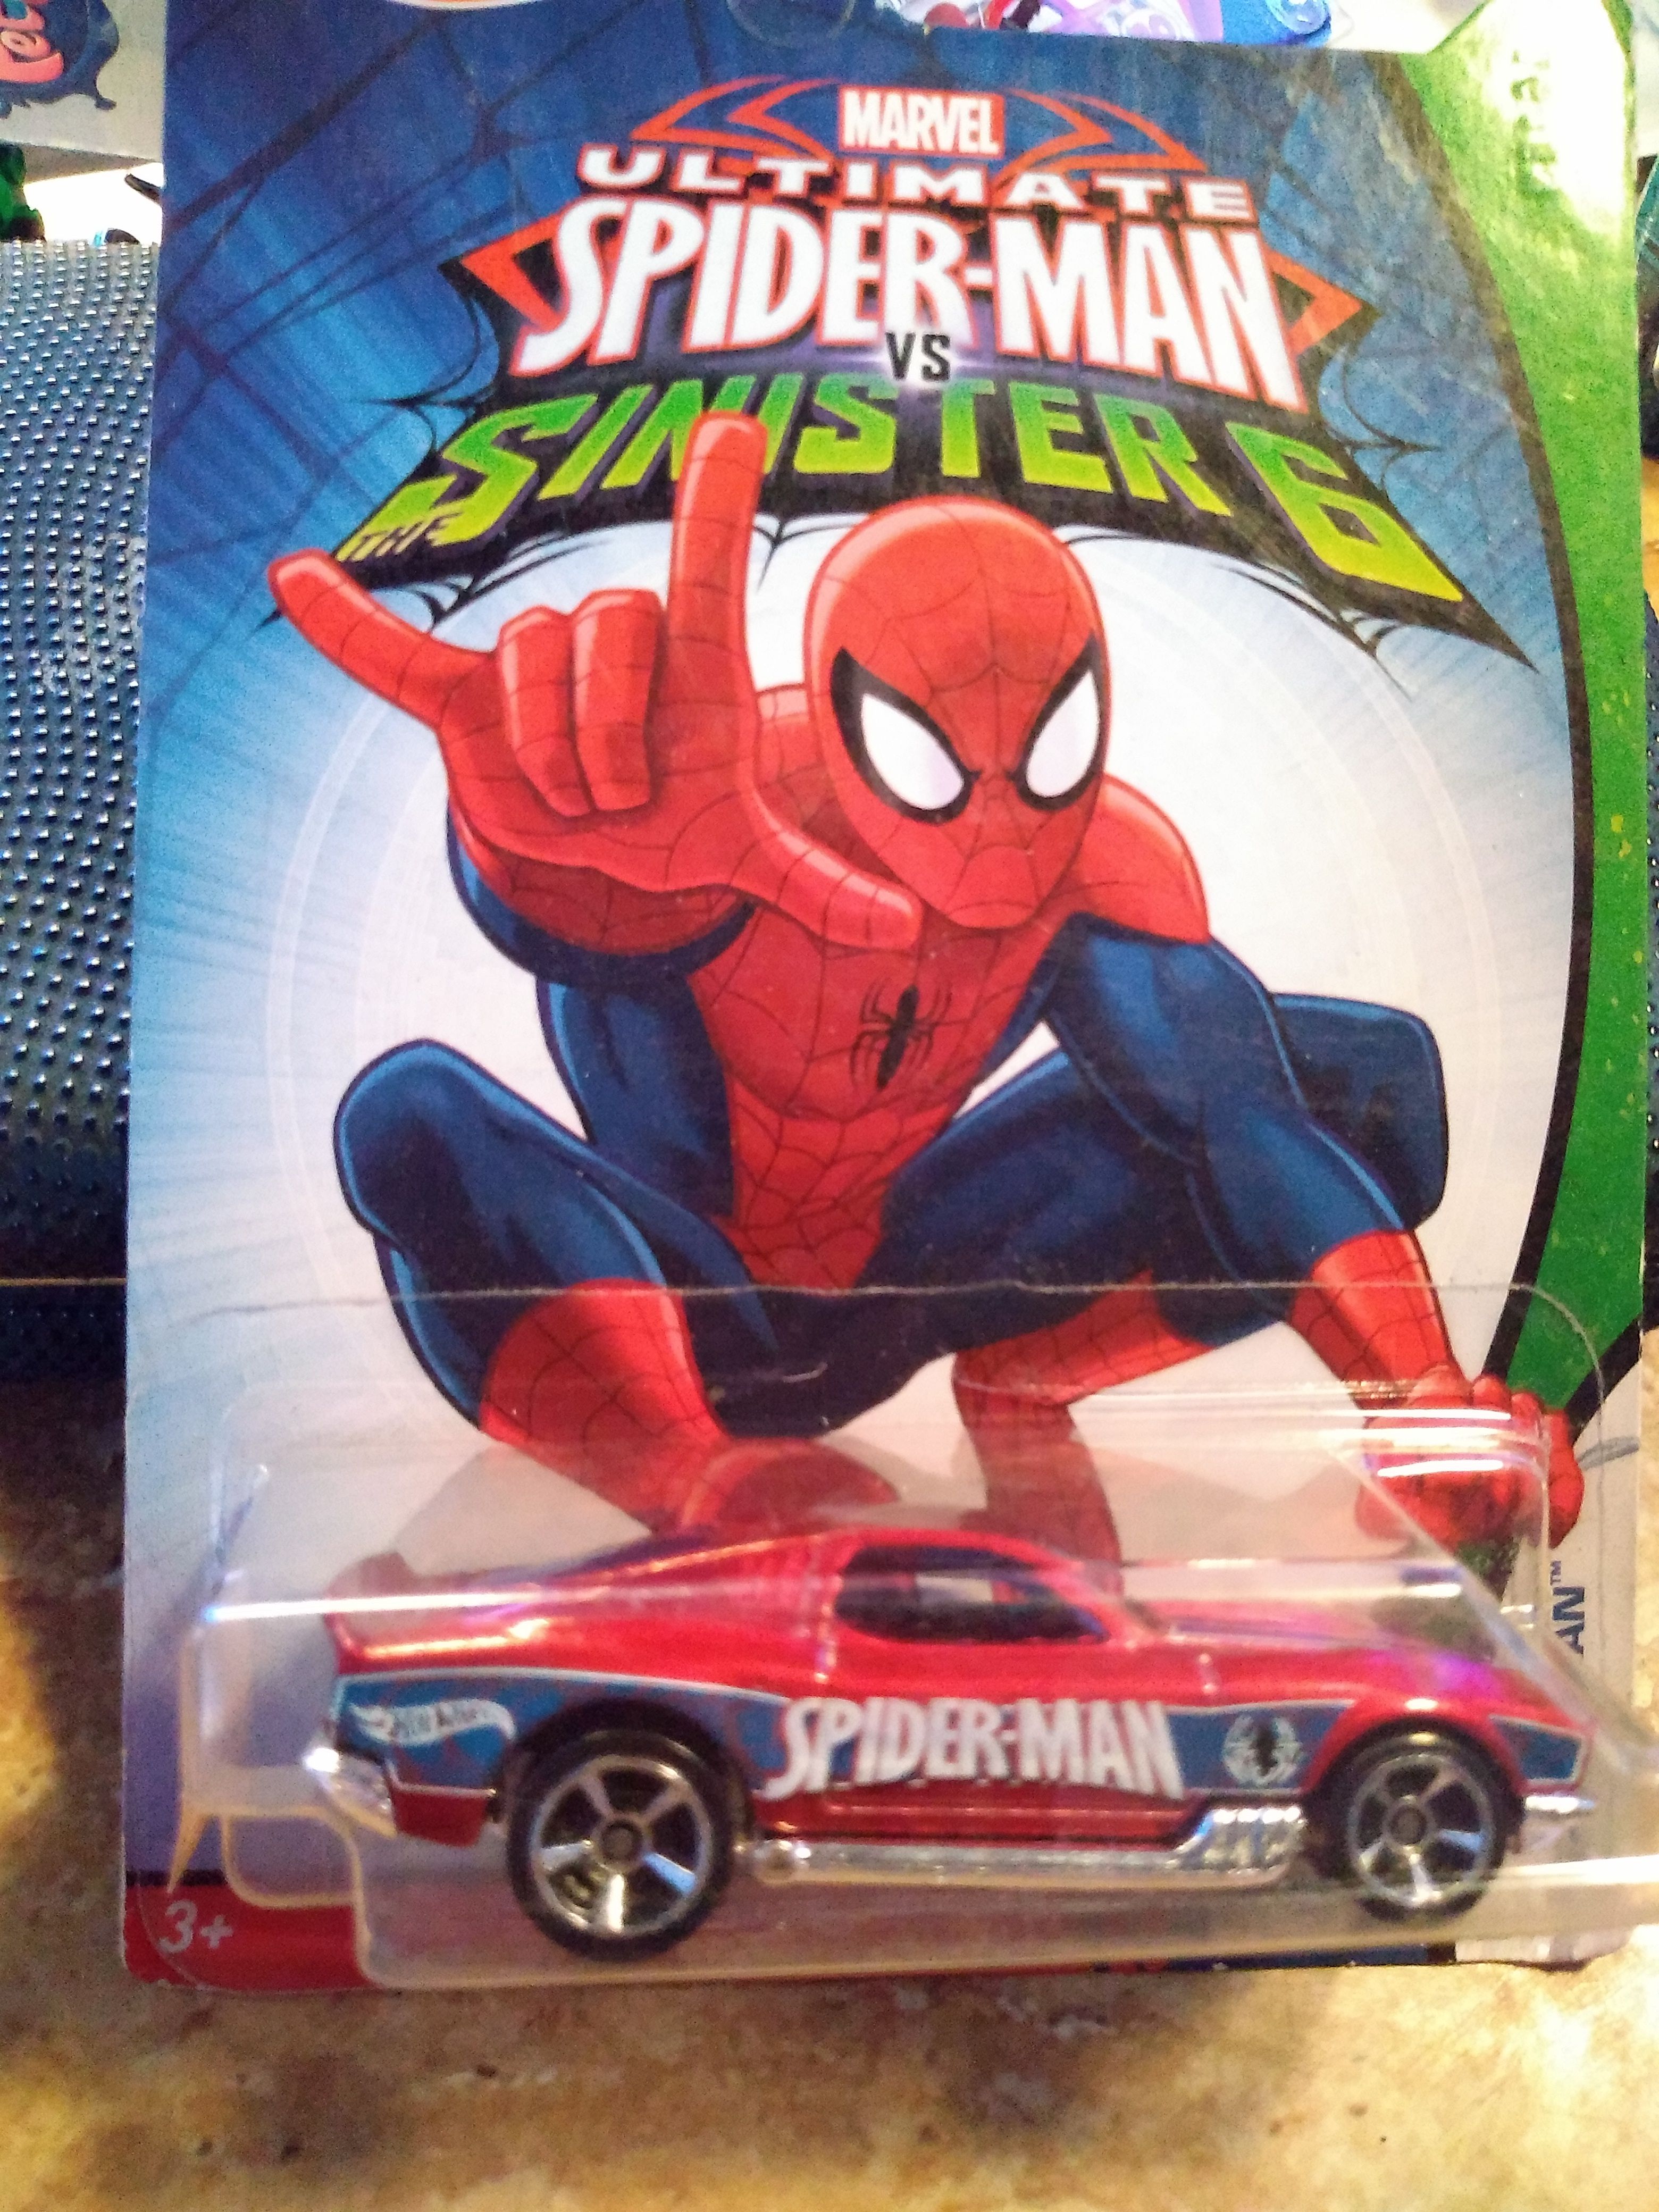 Spiderman Hotwheels bought comic con